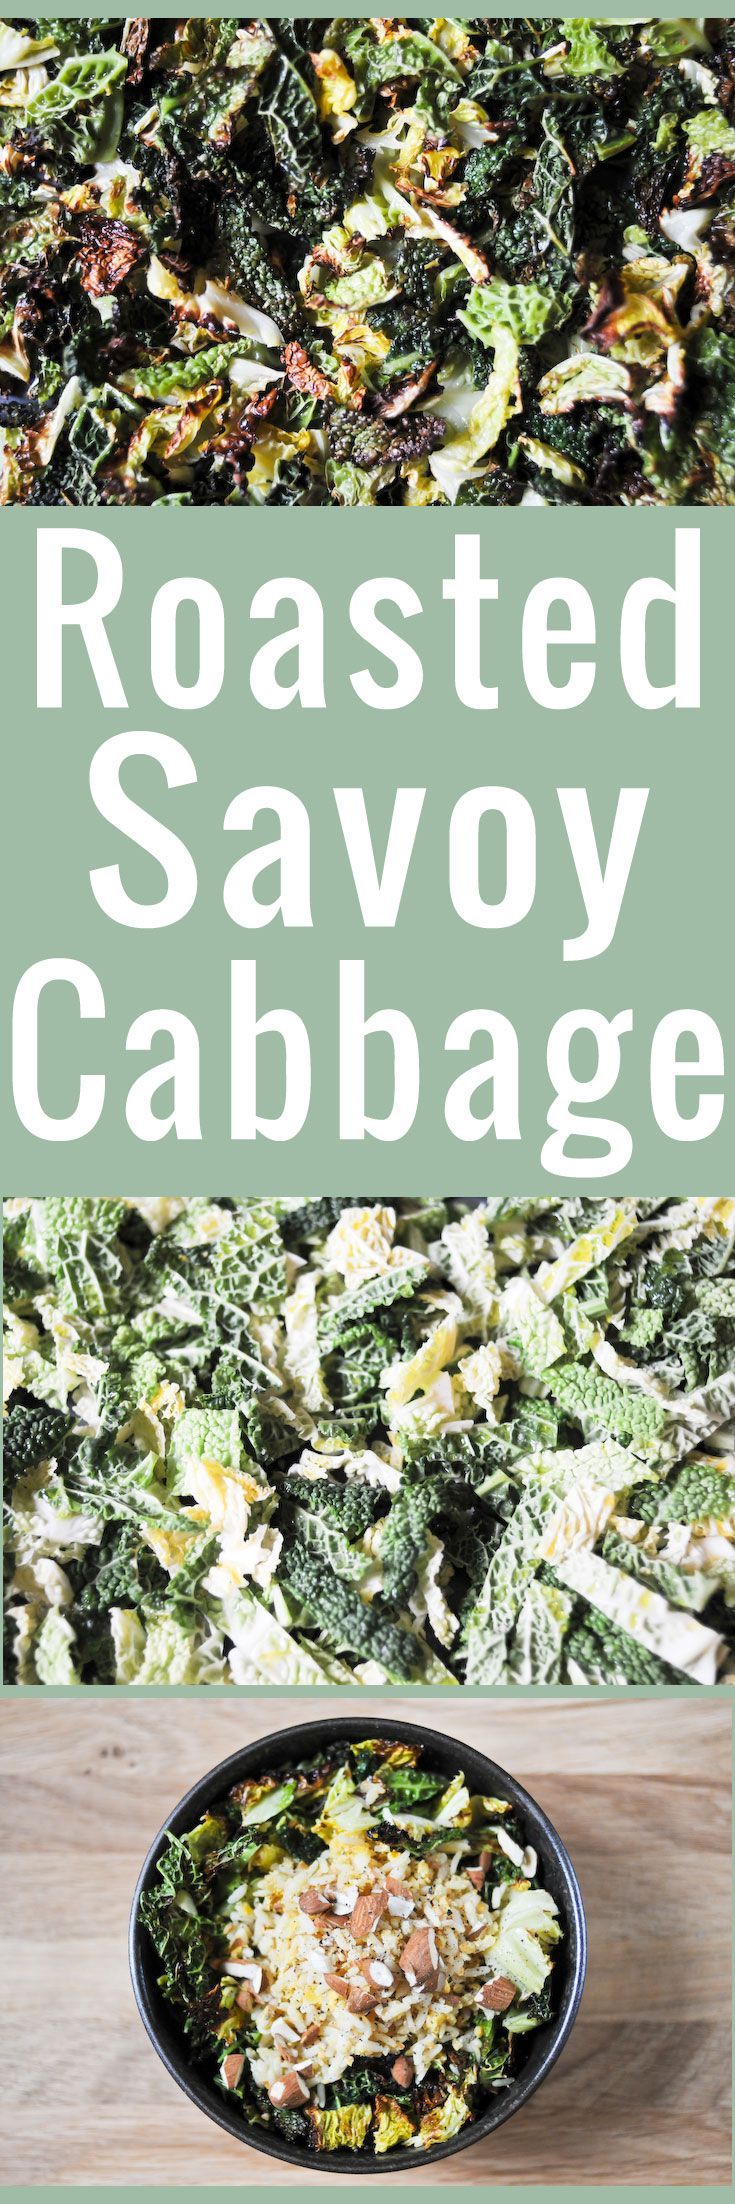 Roasted Savoy Cabbage -   25 savoy cabbage recipes ideas